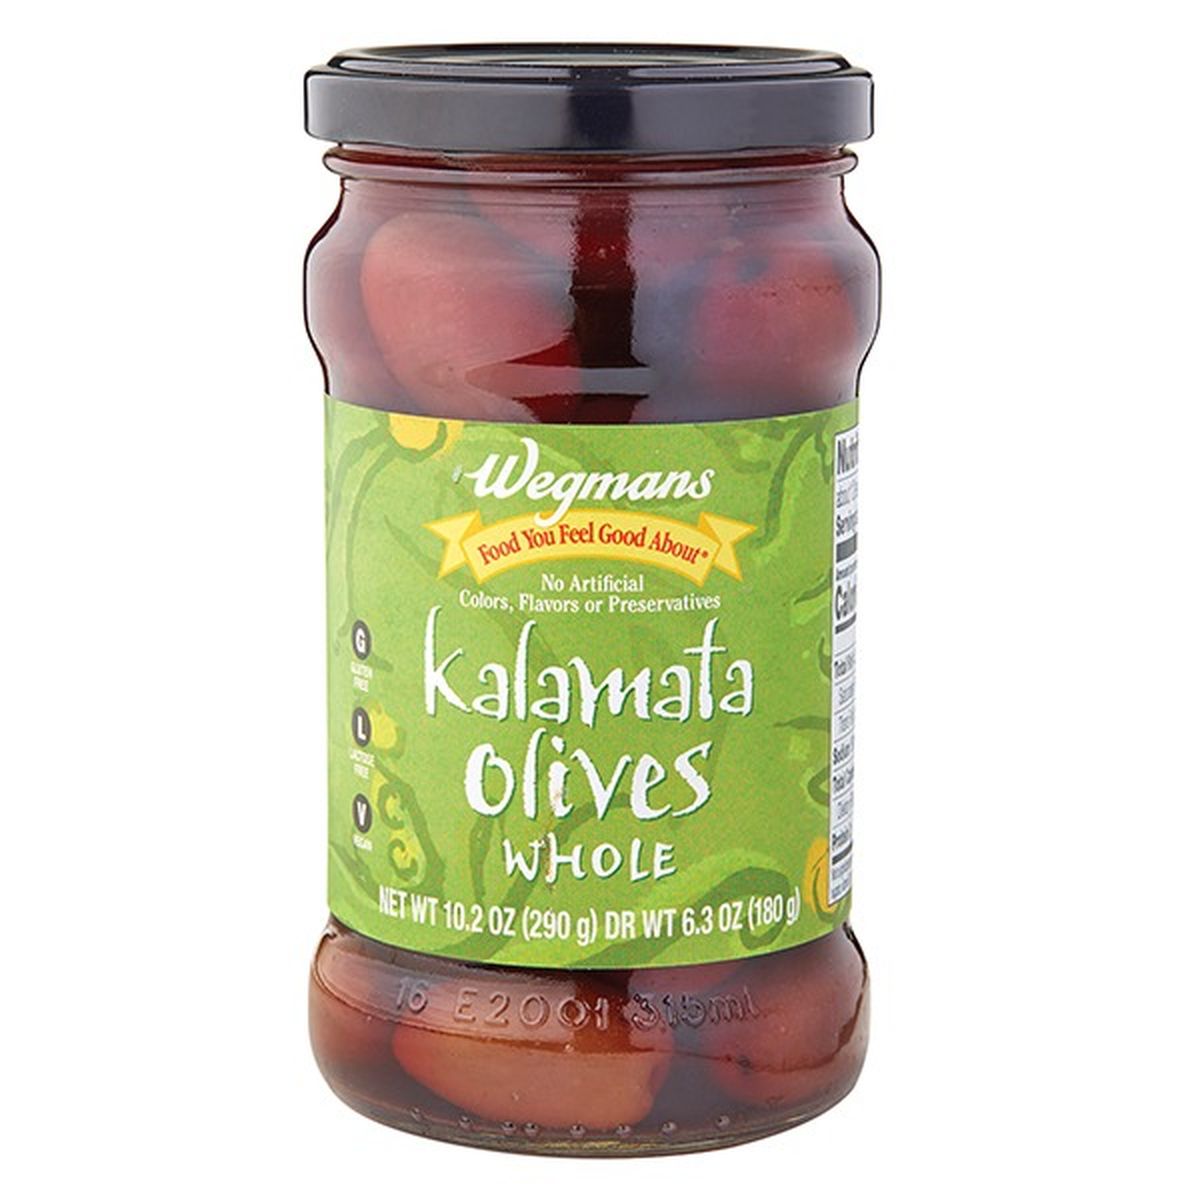 Calories in Wegmans Whole Kalamata Olives